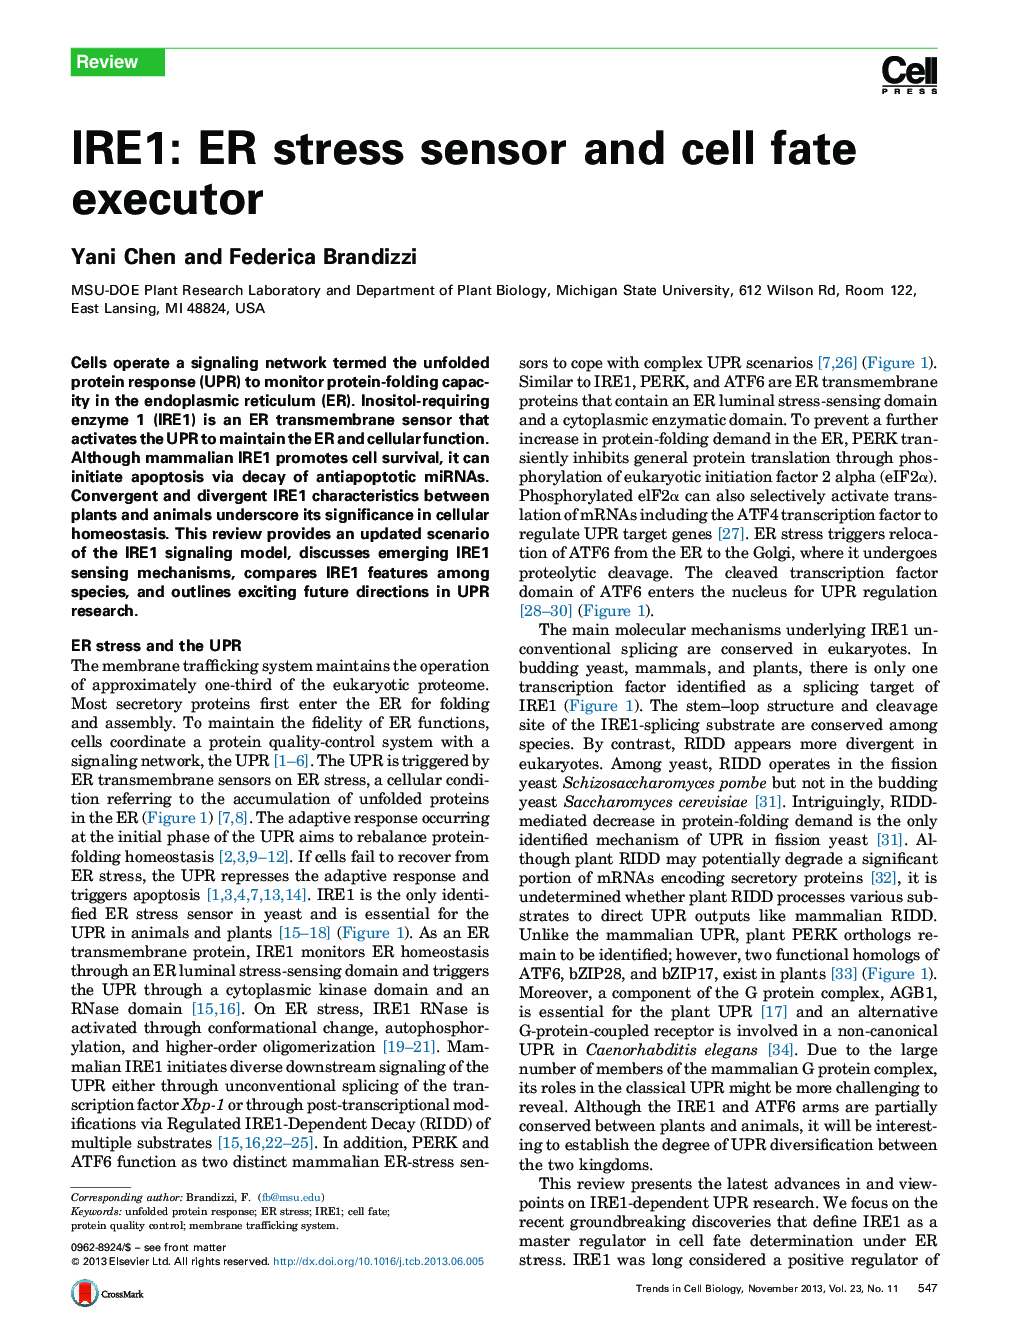 IRE1: ER stress sensor and cell fate executor